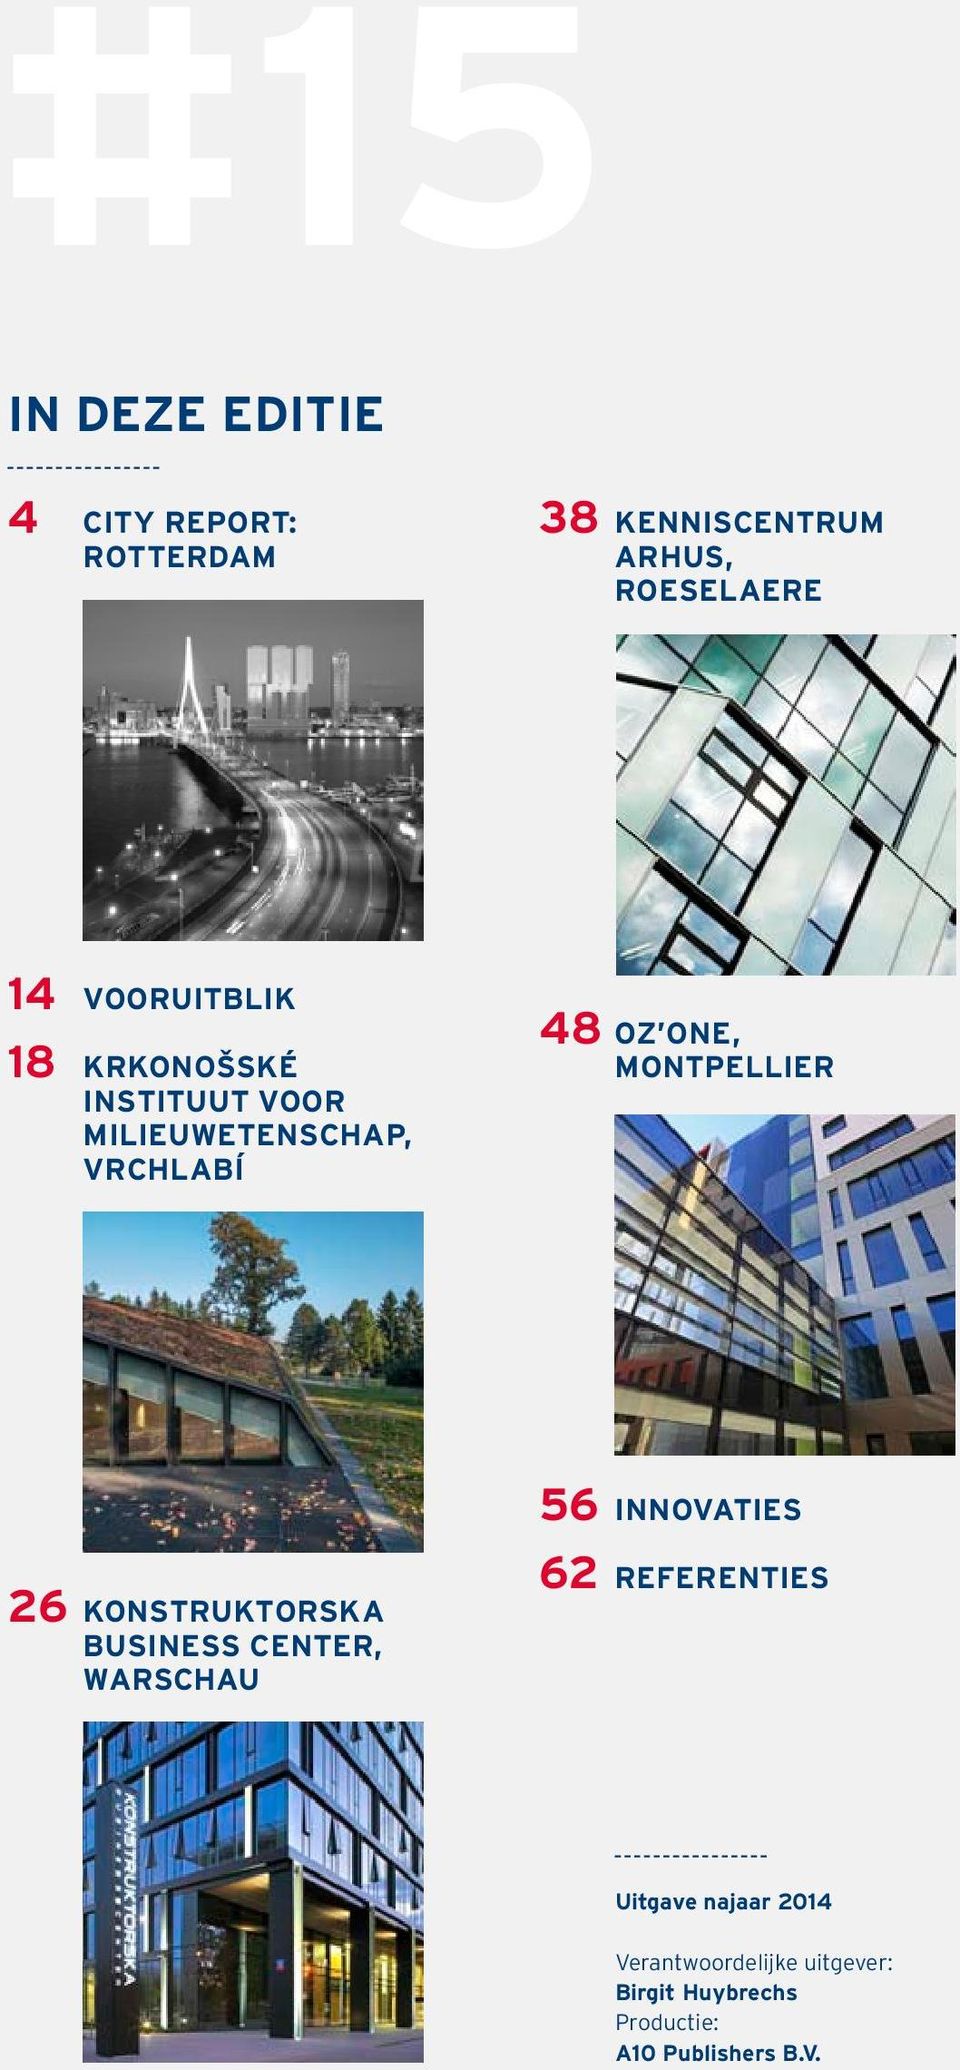 montpellier 56 Innovaties 62 Referenties KOnstruktorska 26 Business Center, Warschau